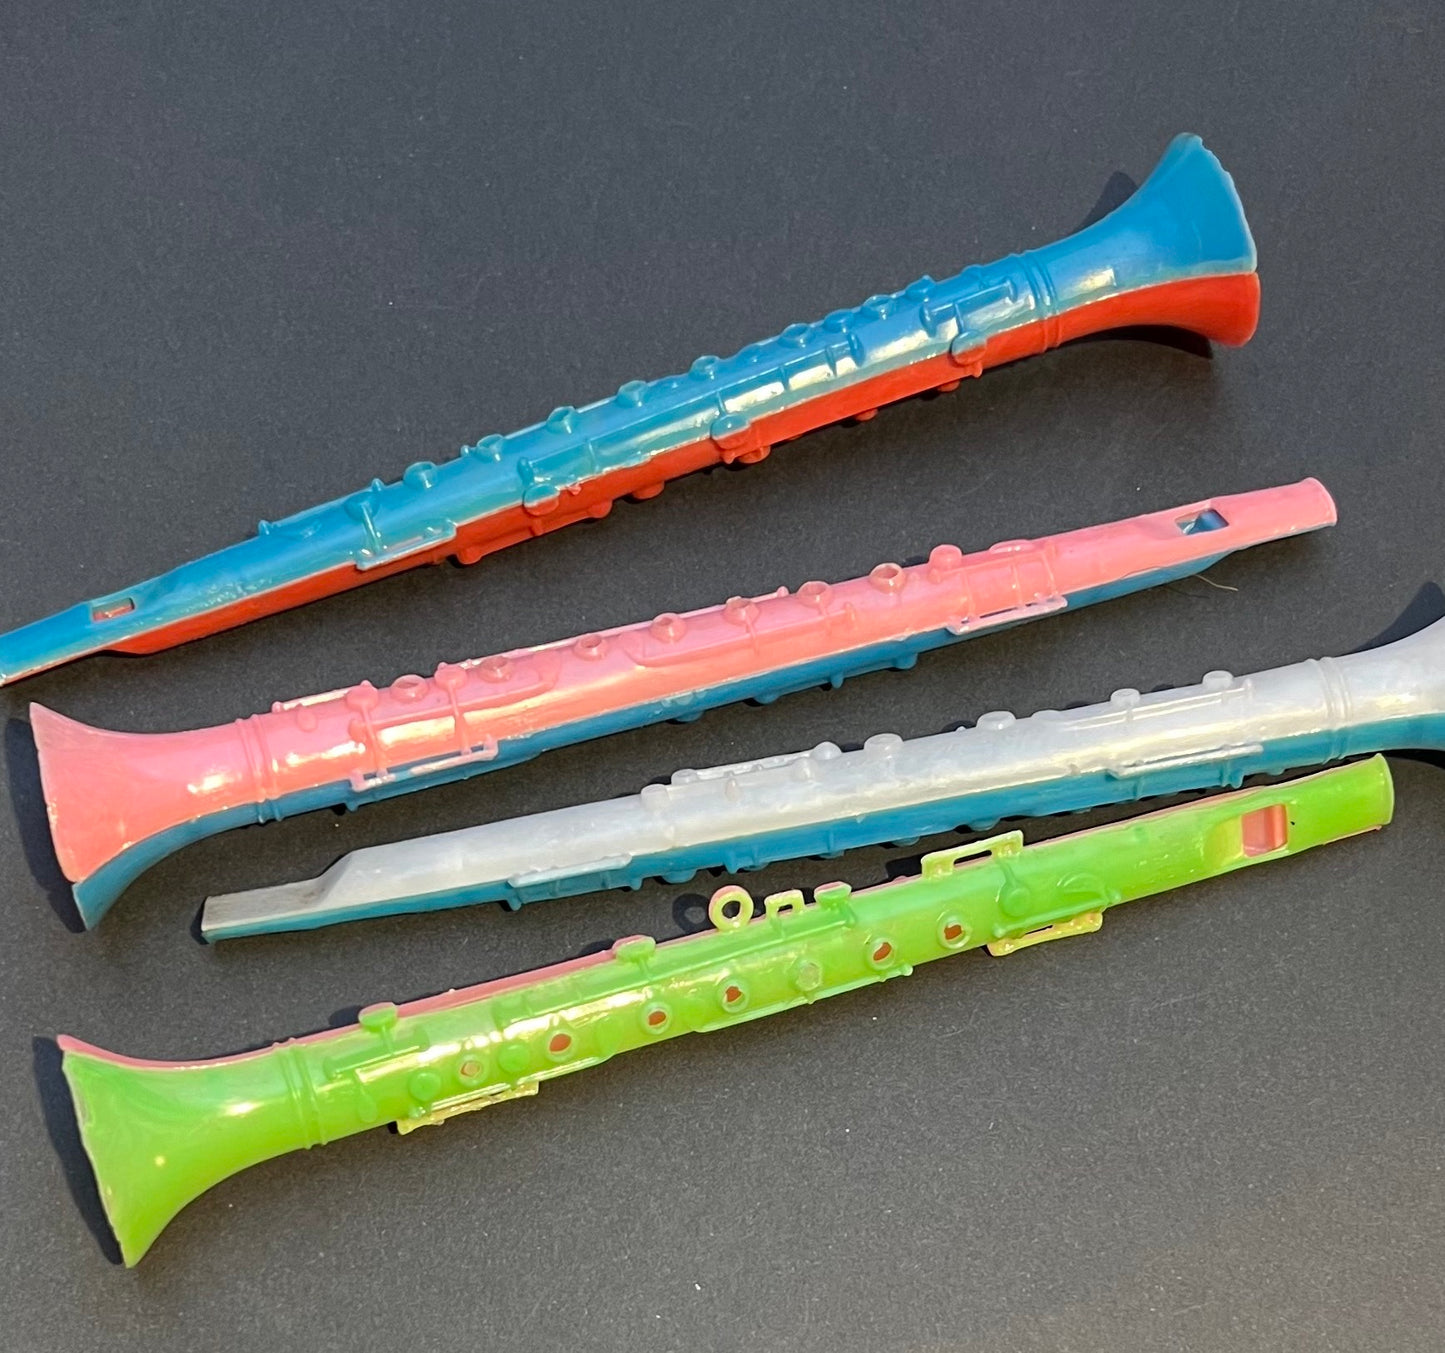 16cm long Vintage Plastic Flute Whistle Made in Hong Kong